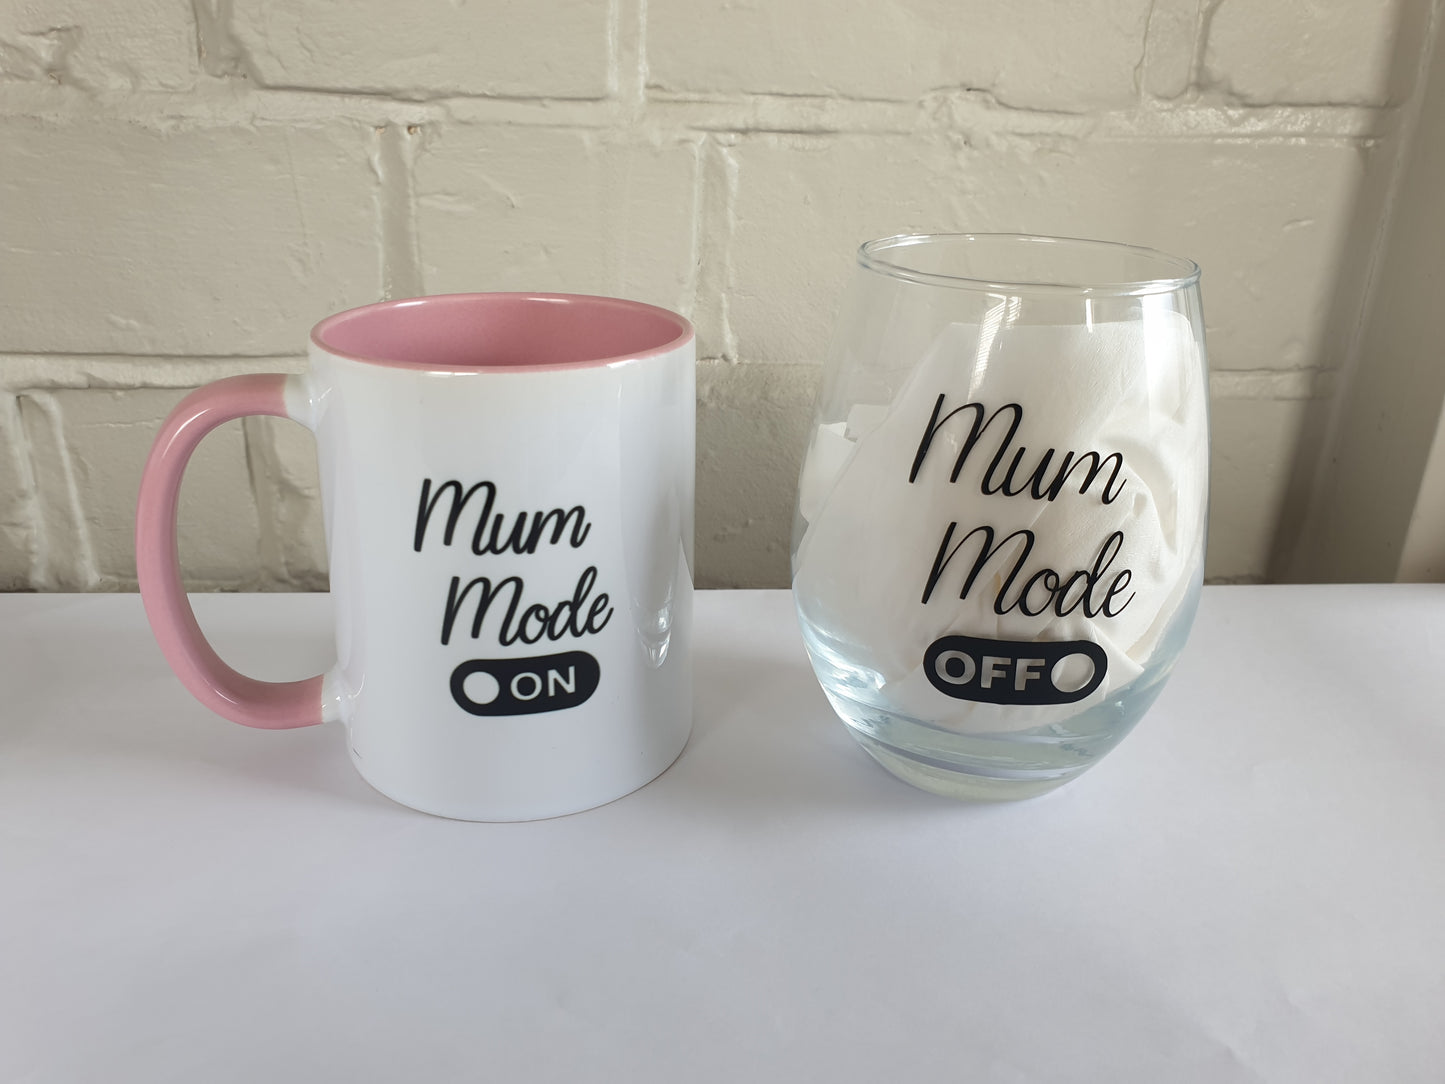 Mum mode on mug